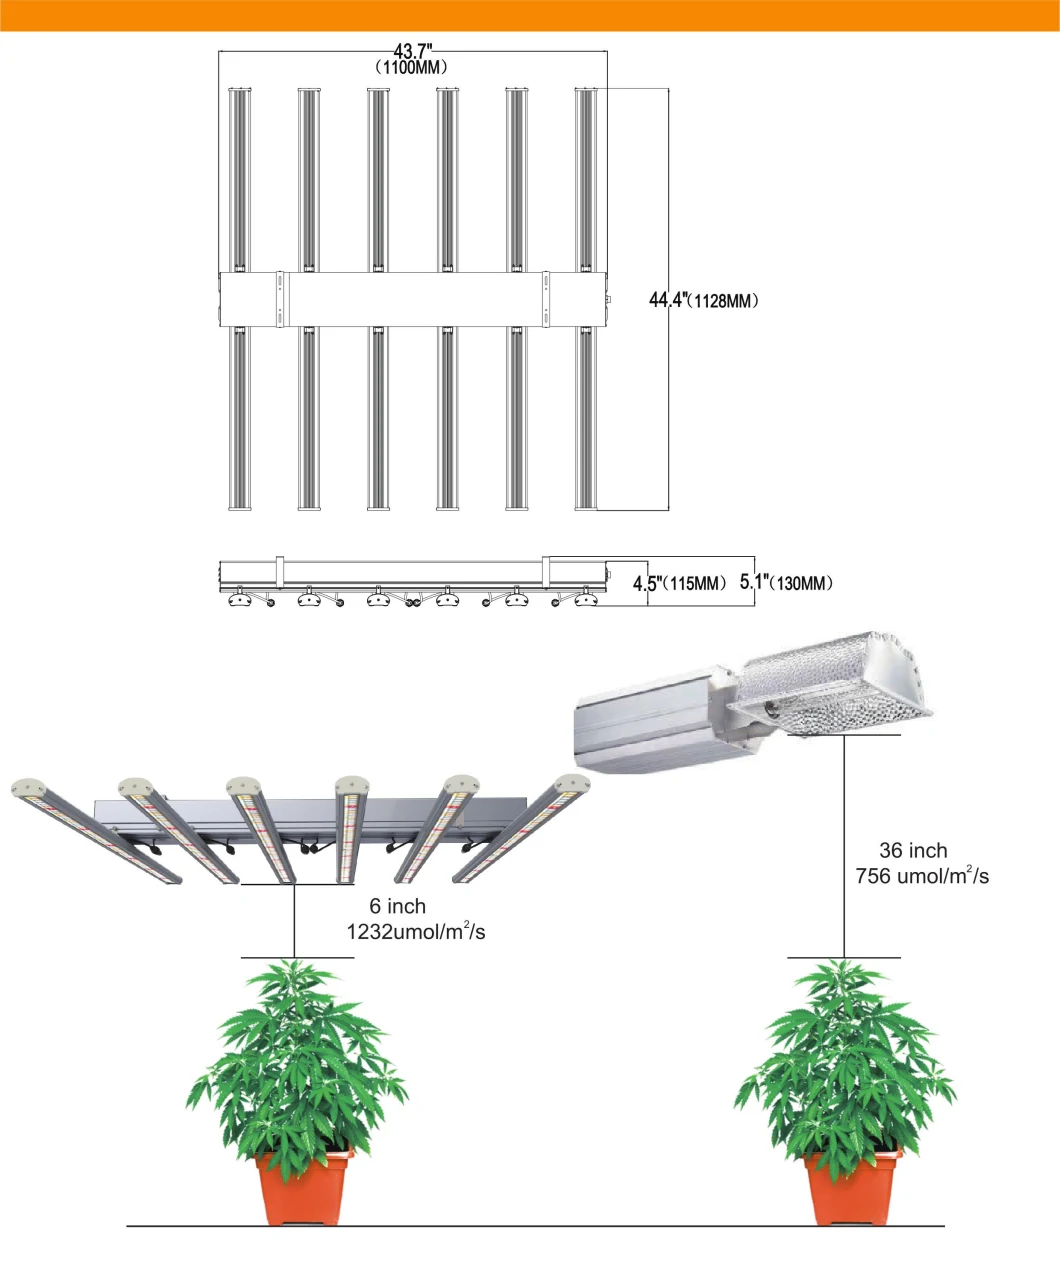 Fluence 640W LED Grow Light Bars Strips Hydroponics Full Spectrum Grow LED Horticulture Plant Lights